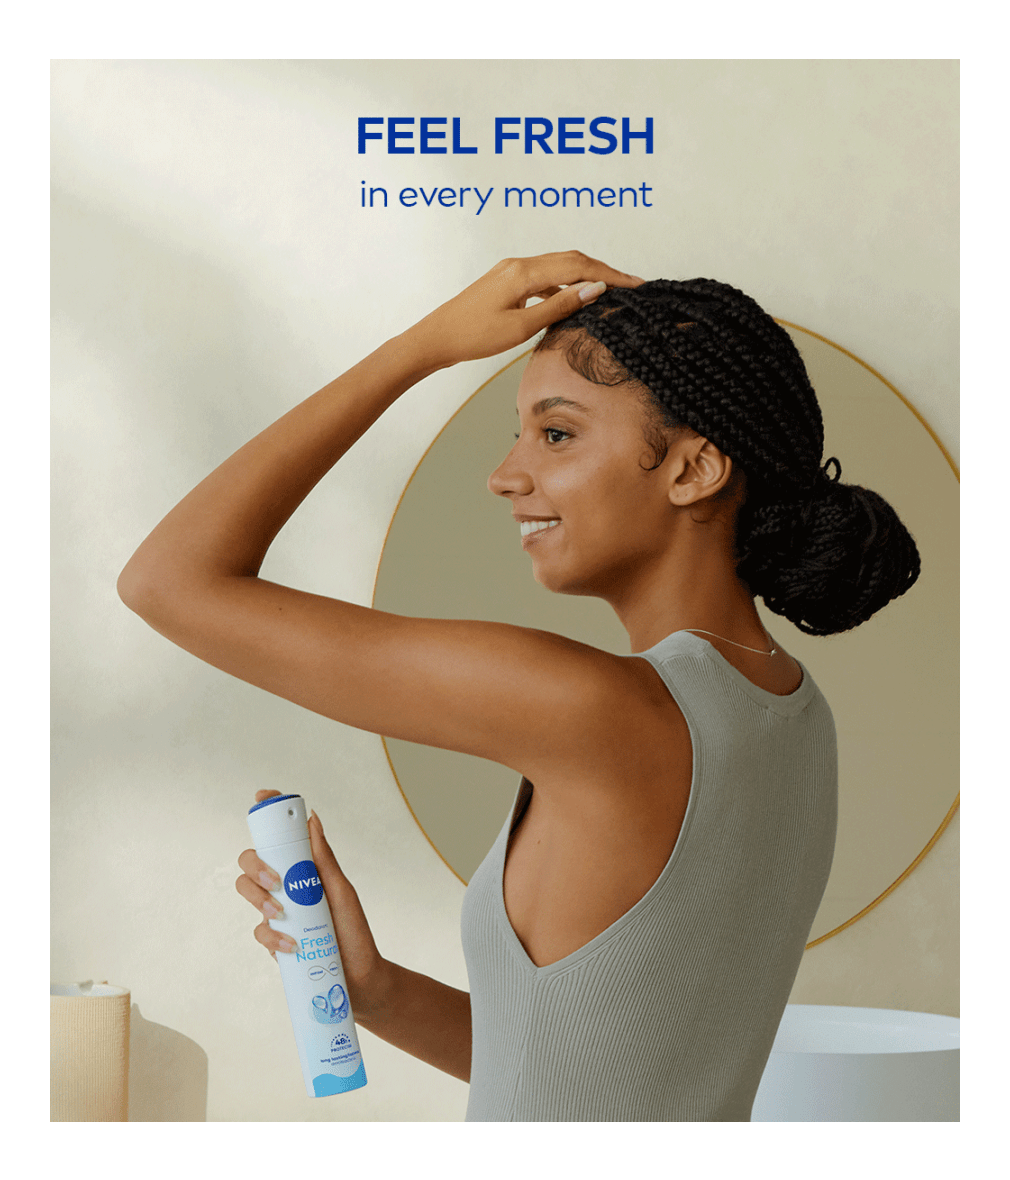 Nivea - Fresh Natural Deodorante spray